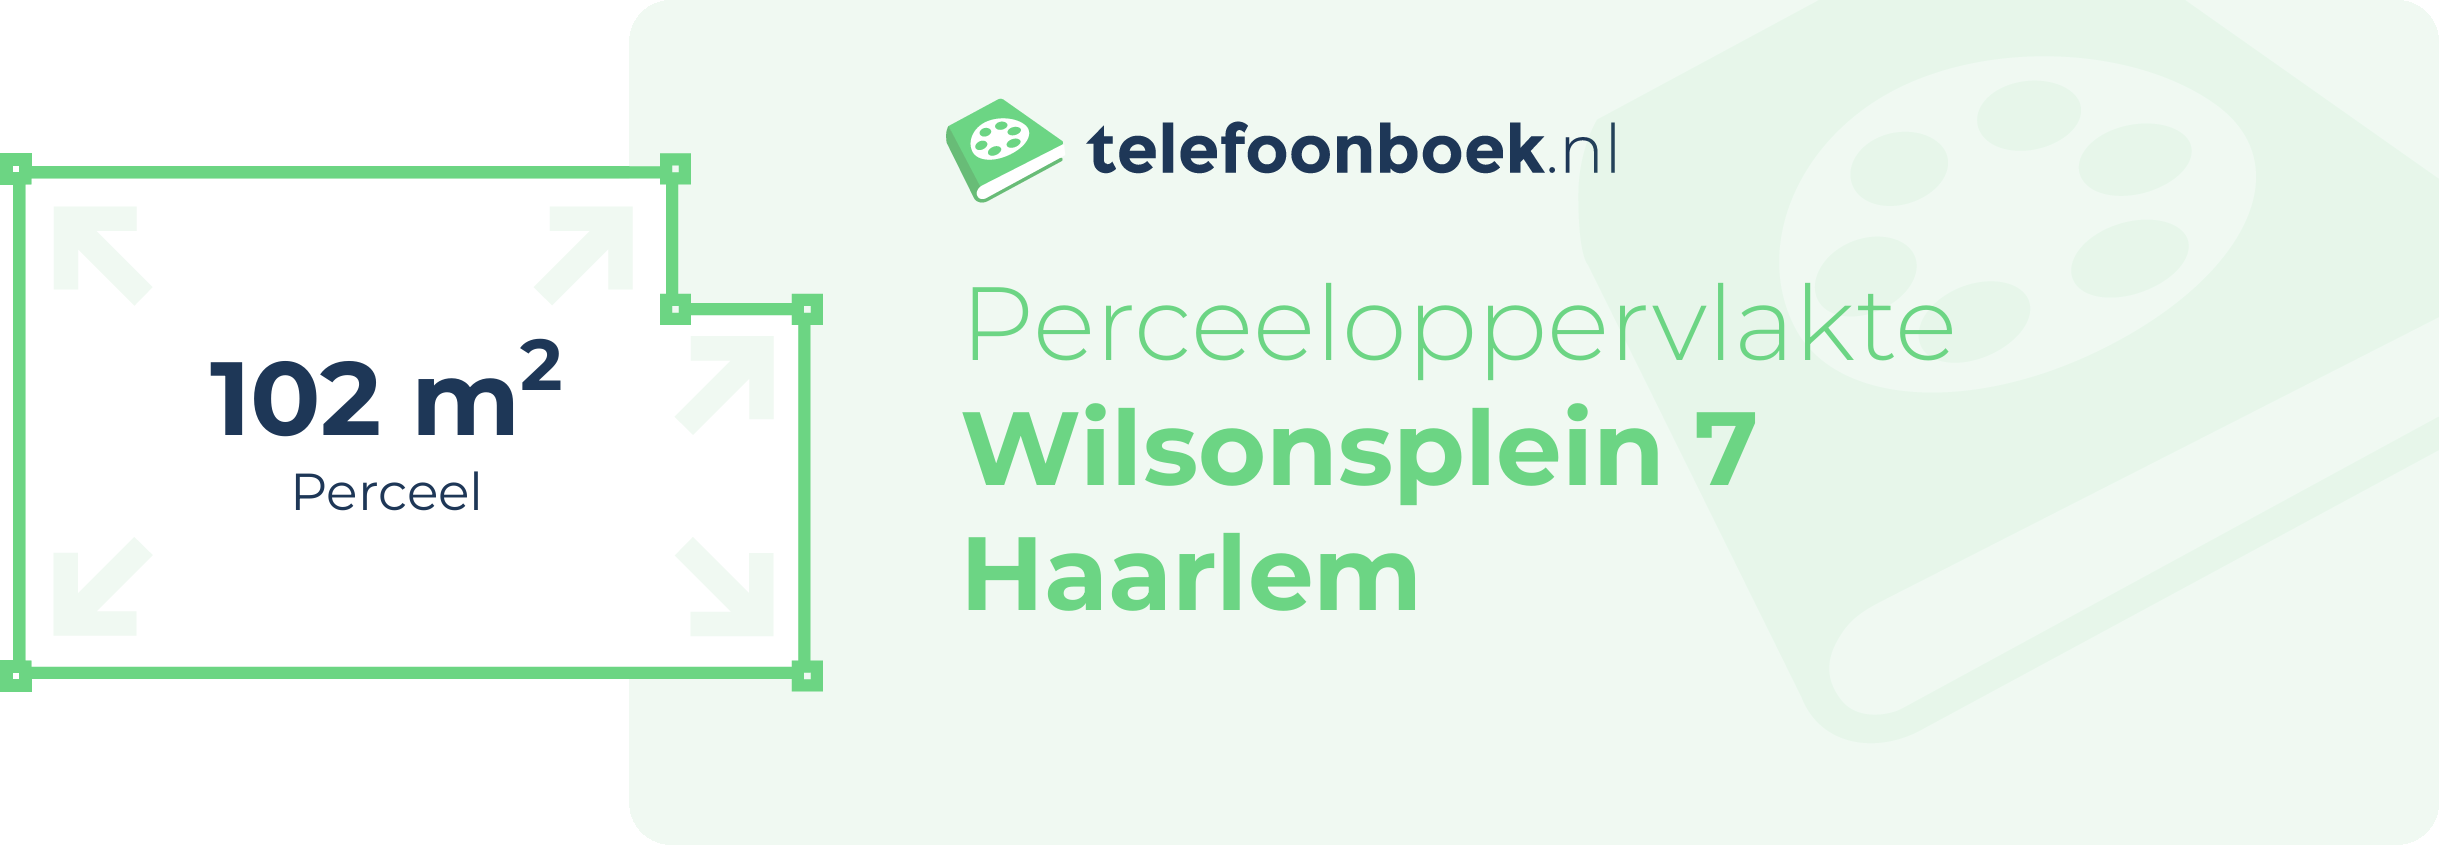 Perceeloppervlakte Wilsonsplein 7 Haarlem